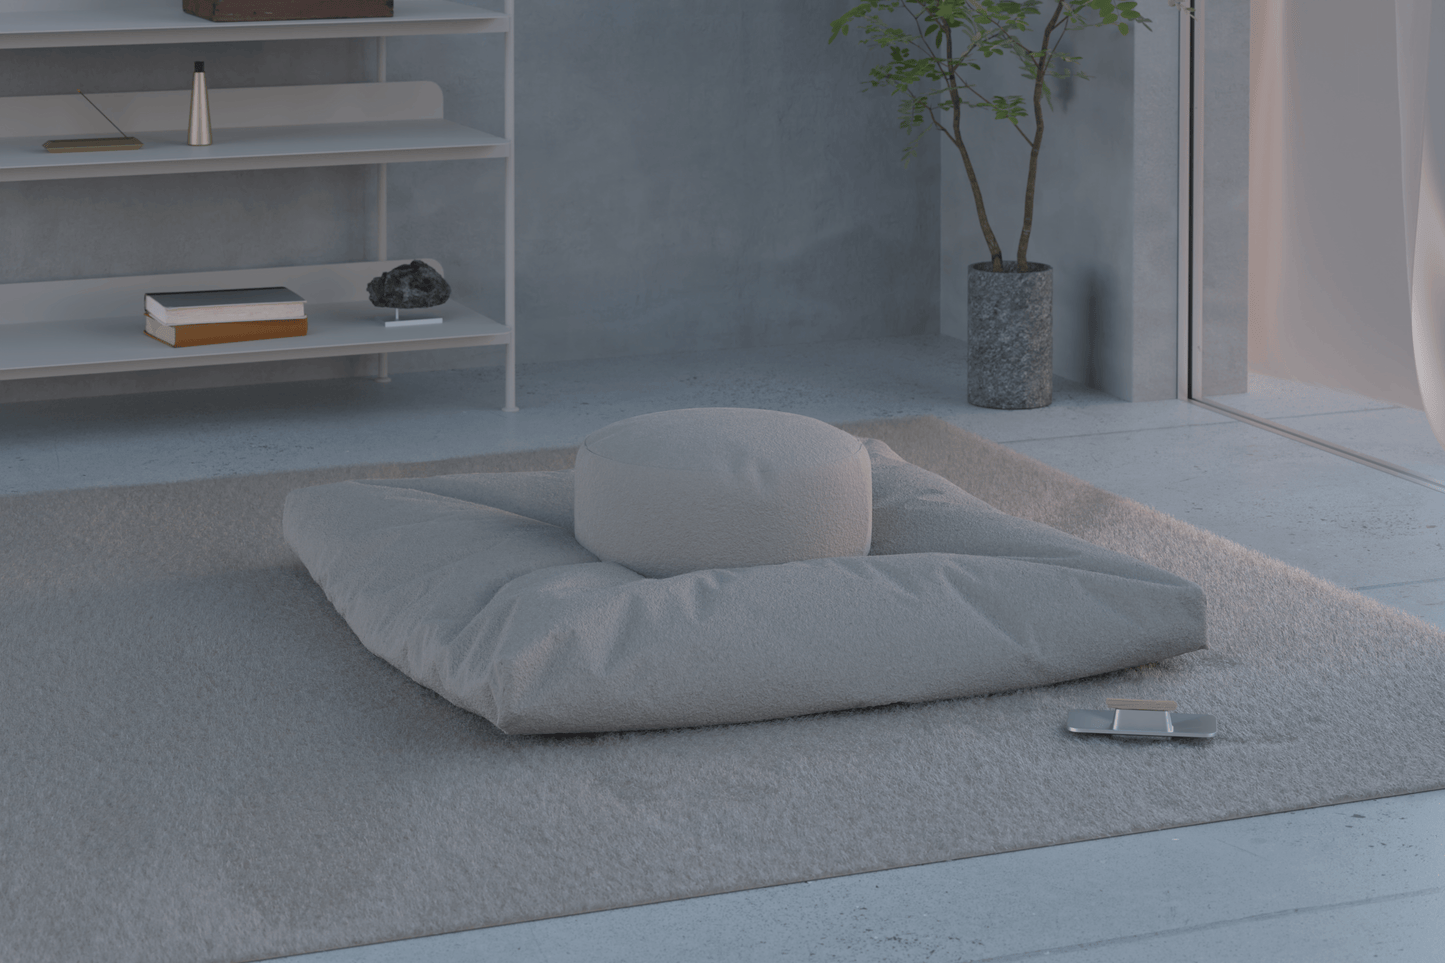 Evolve by Erika Bouclé Meditation Cushion & Mat Set